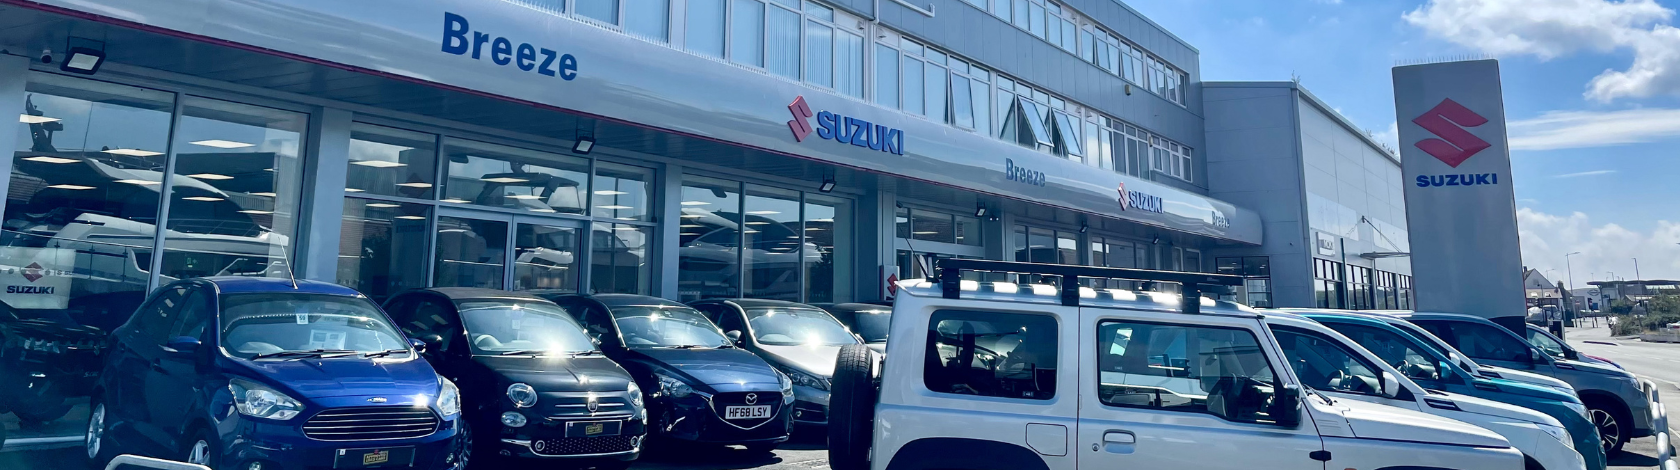 Meet the Team at Breeze Suzuki